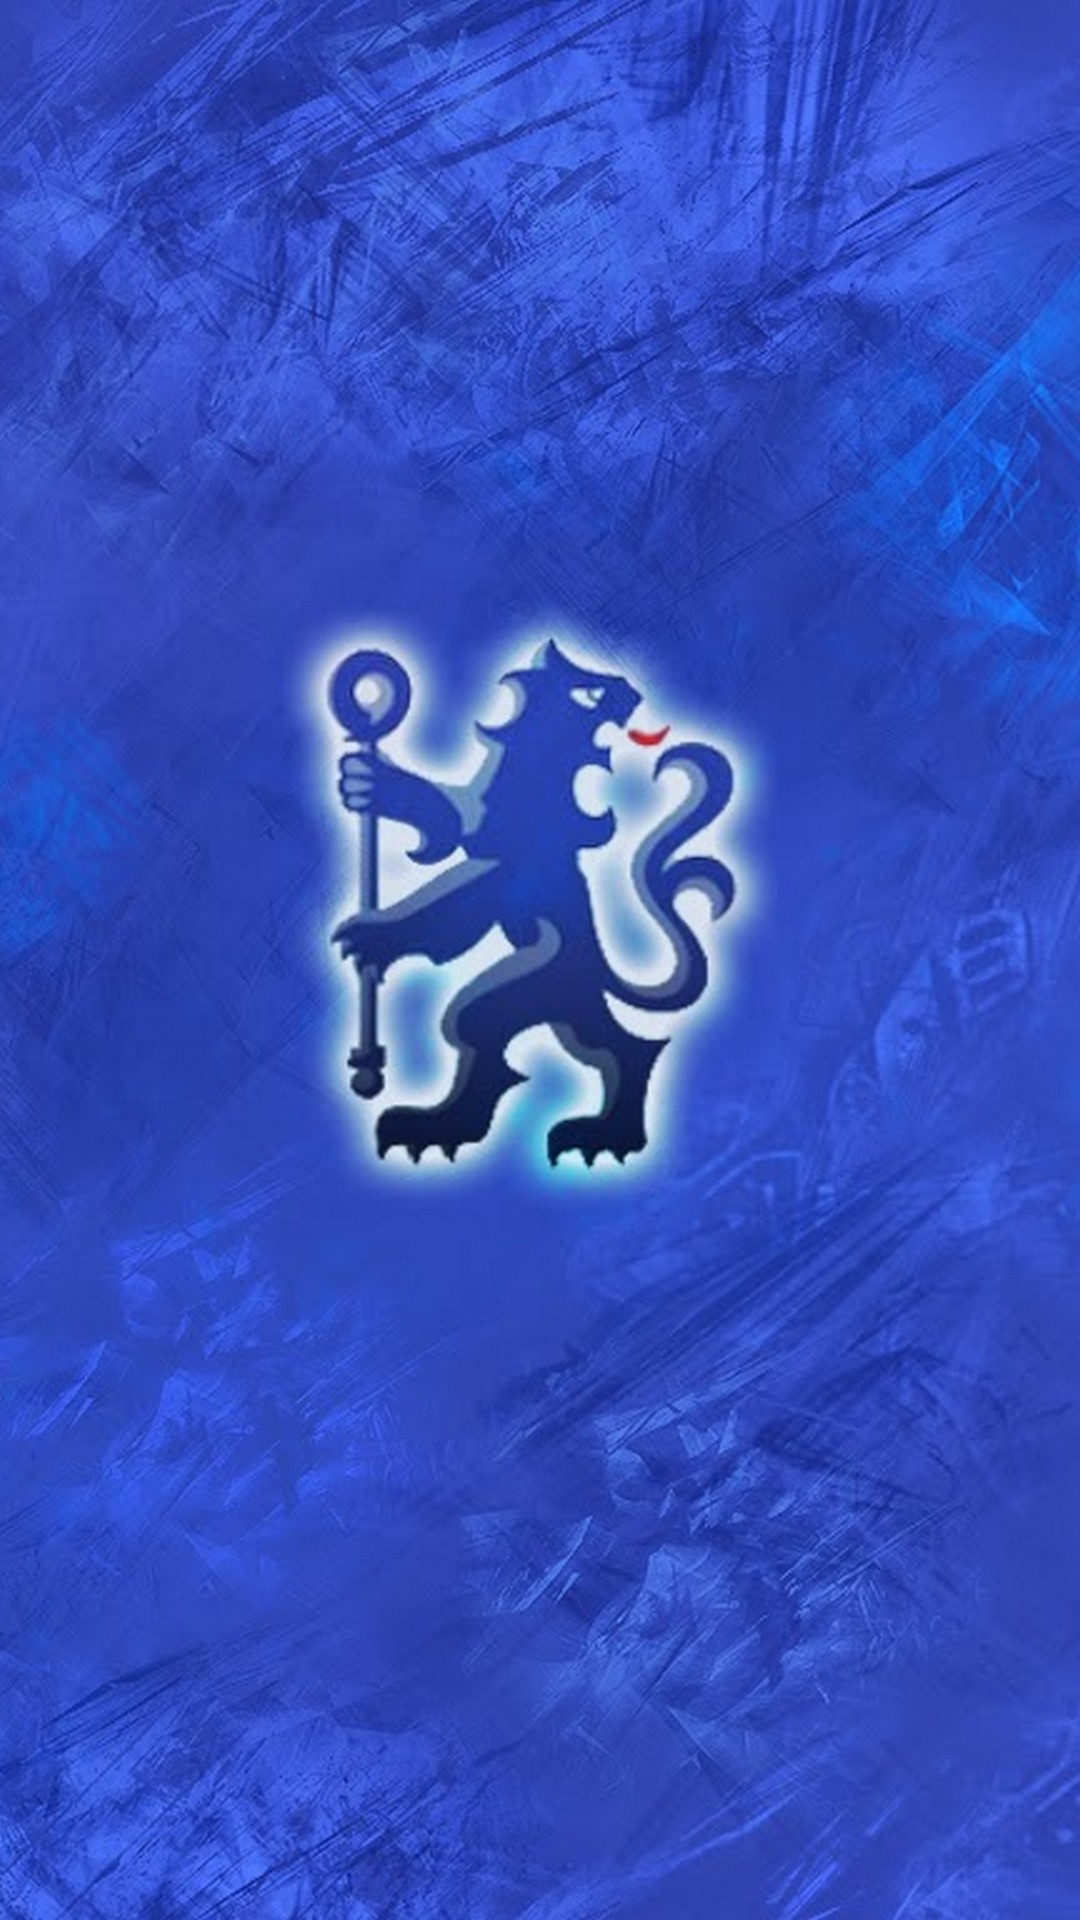 Chelsea Football Wallpaper Iphone Hd With Resolution Chelsea Fc 1080x1920 Wallpaper Teahub Io